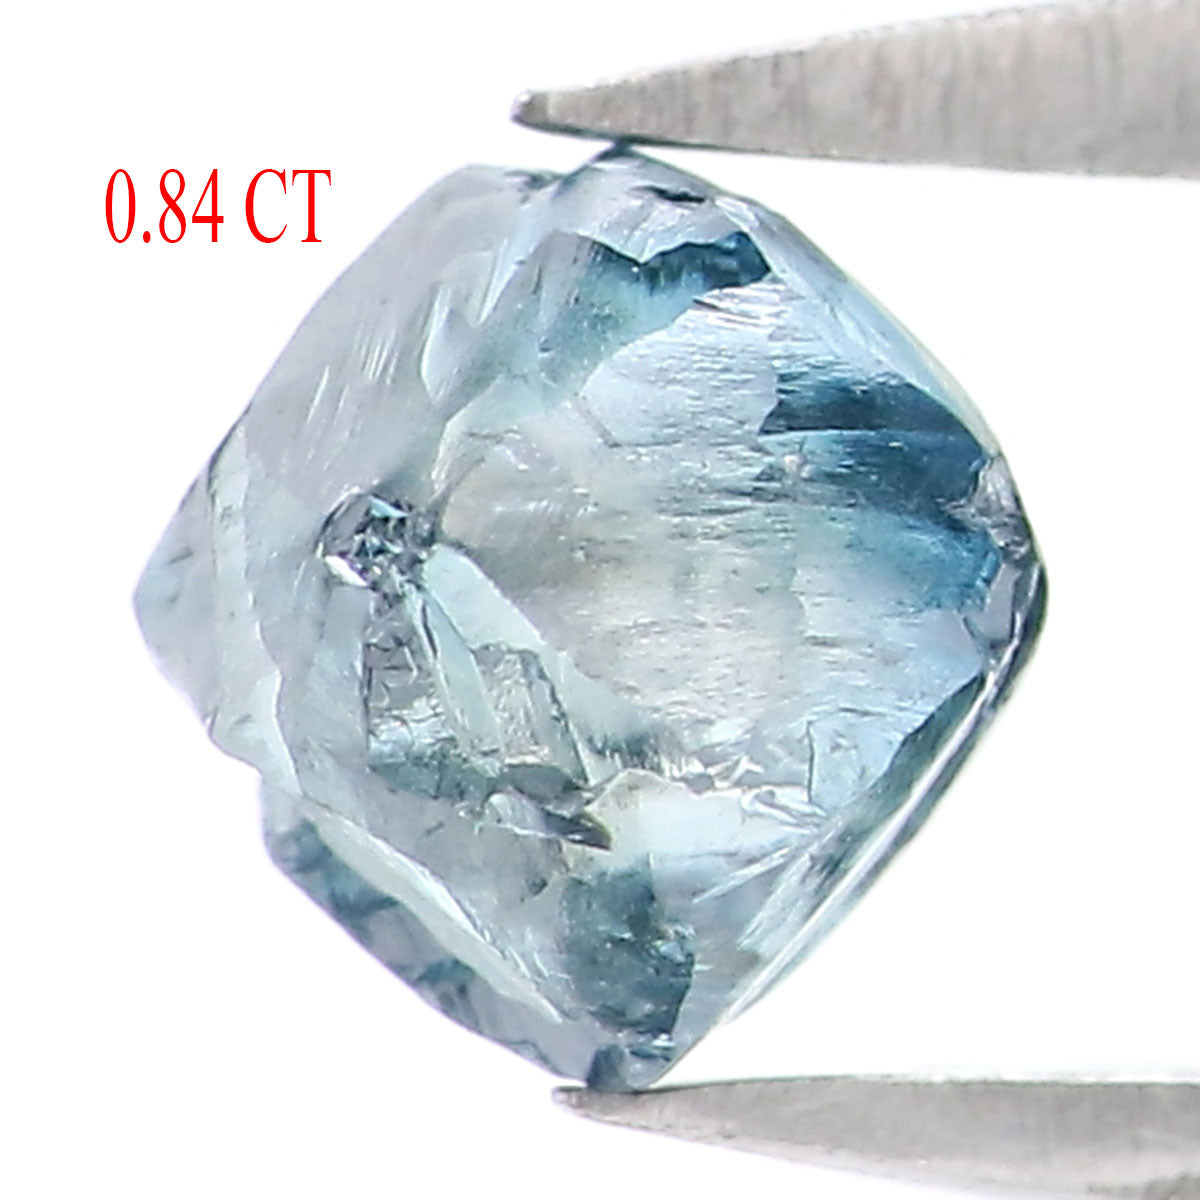 0.84 CT Natural Loose Rough Shape Diamond Blue Color Rough Cut Diamond 4.80 MM Natural Loose Diamond Rough Irregular Cut Diamond LQ2242